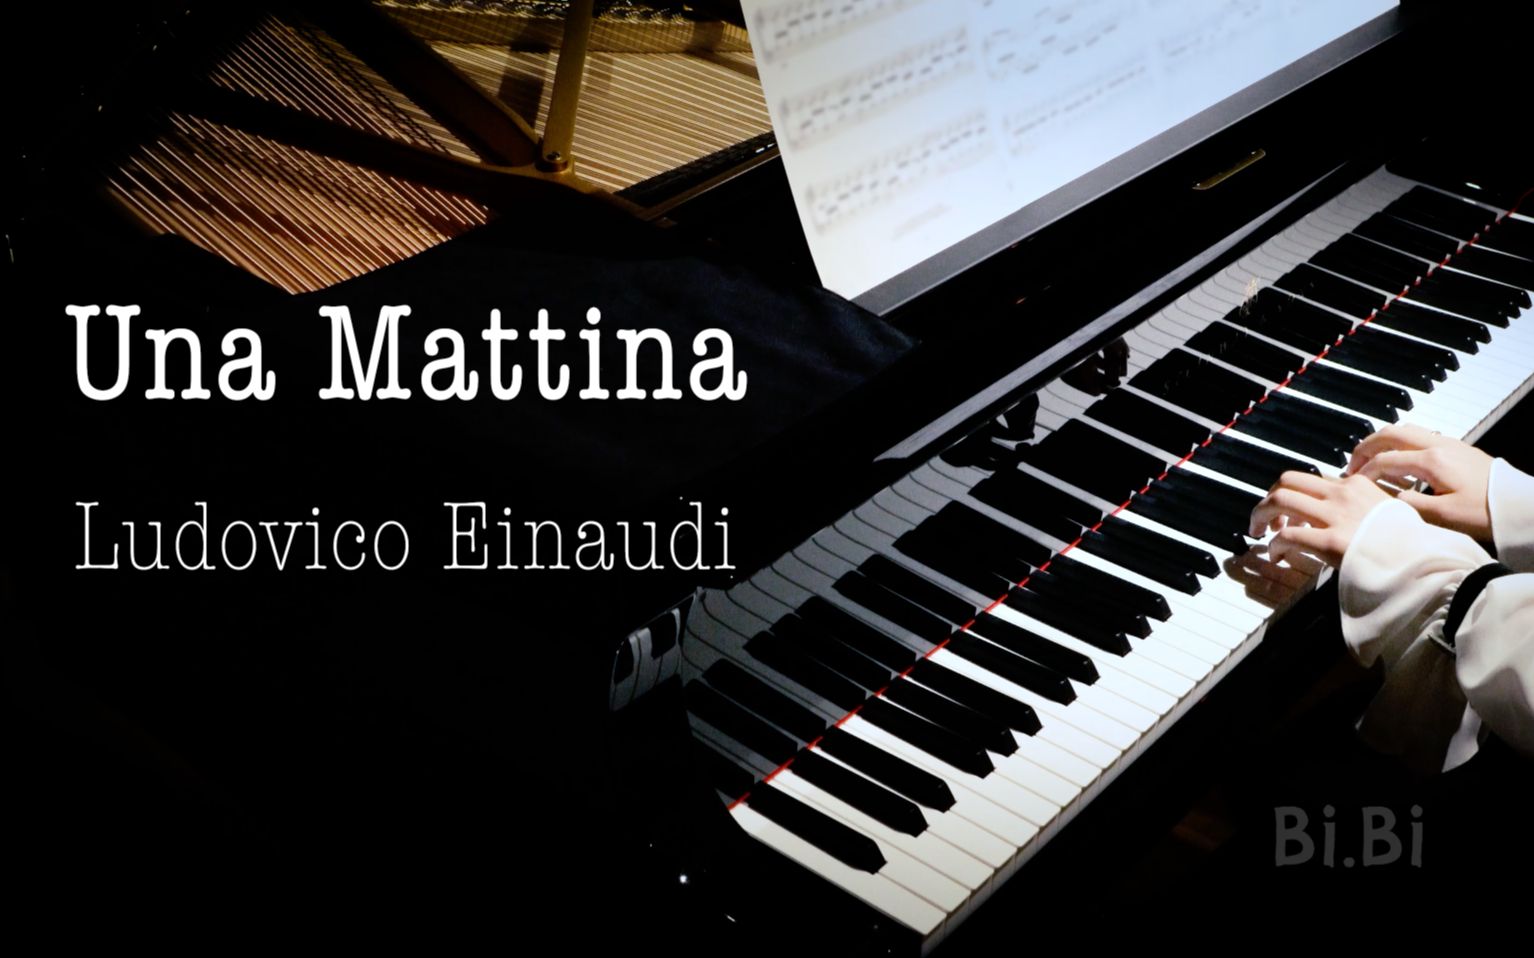 冬日温情钢琴曲 Una Mattina 触不可及 Intouchables 无法触碰 Ludovico Einaudi【高清音质】